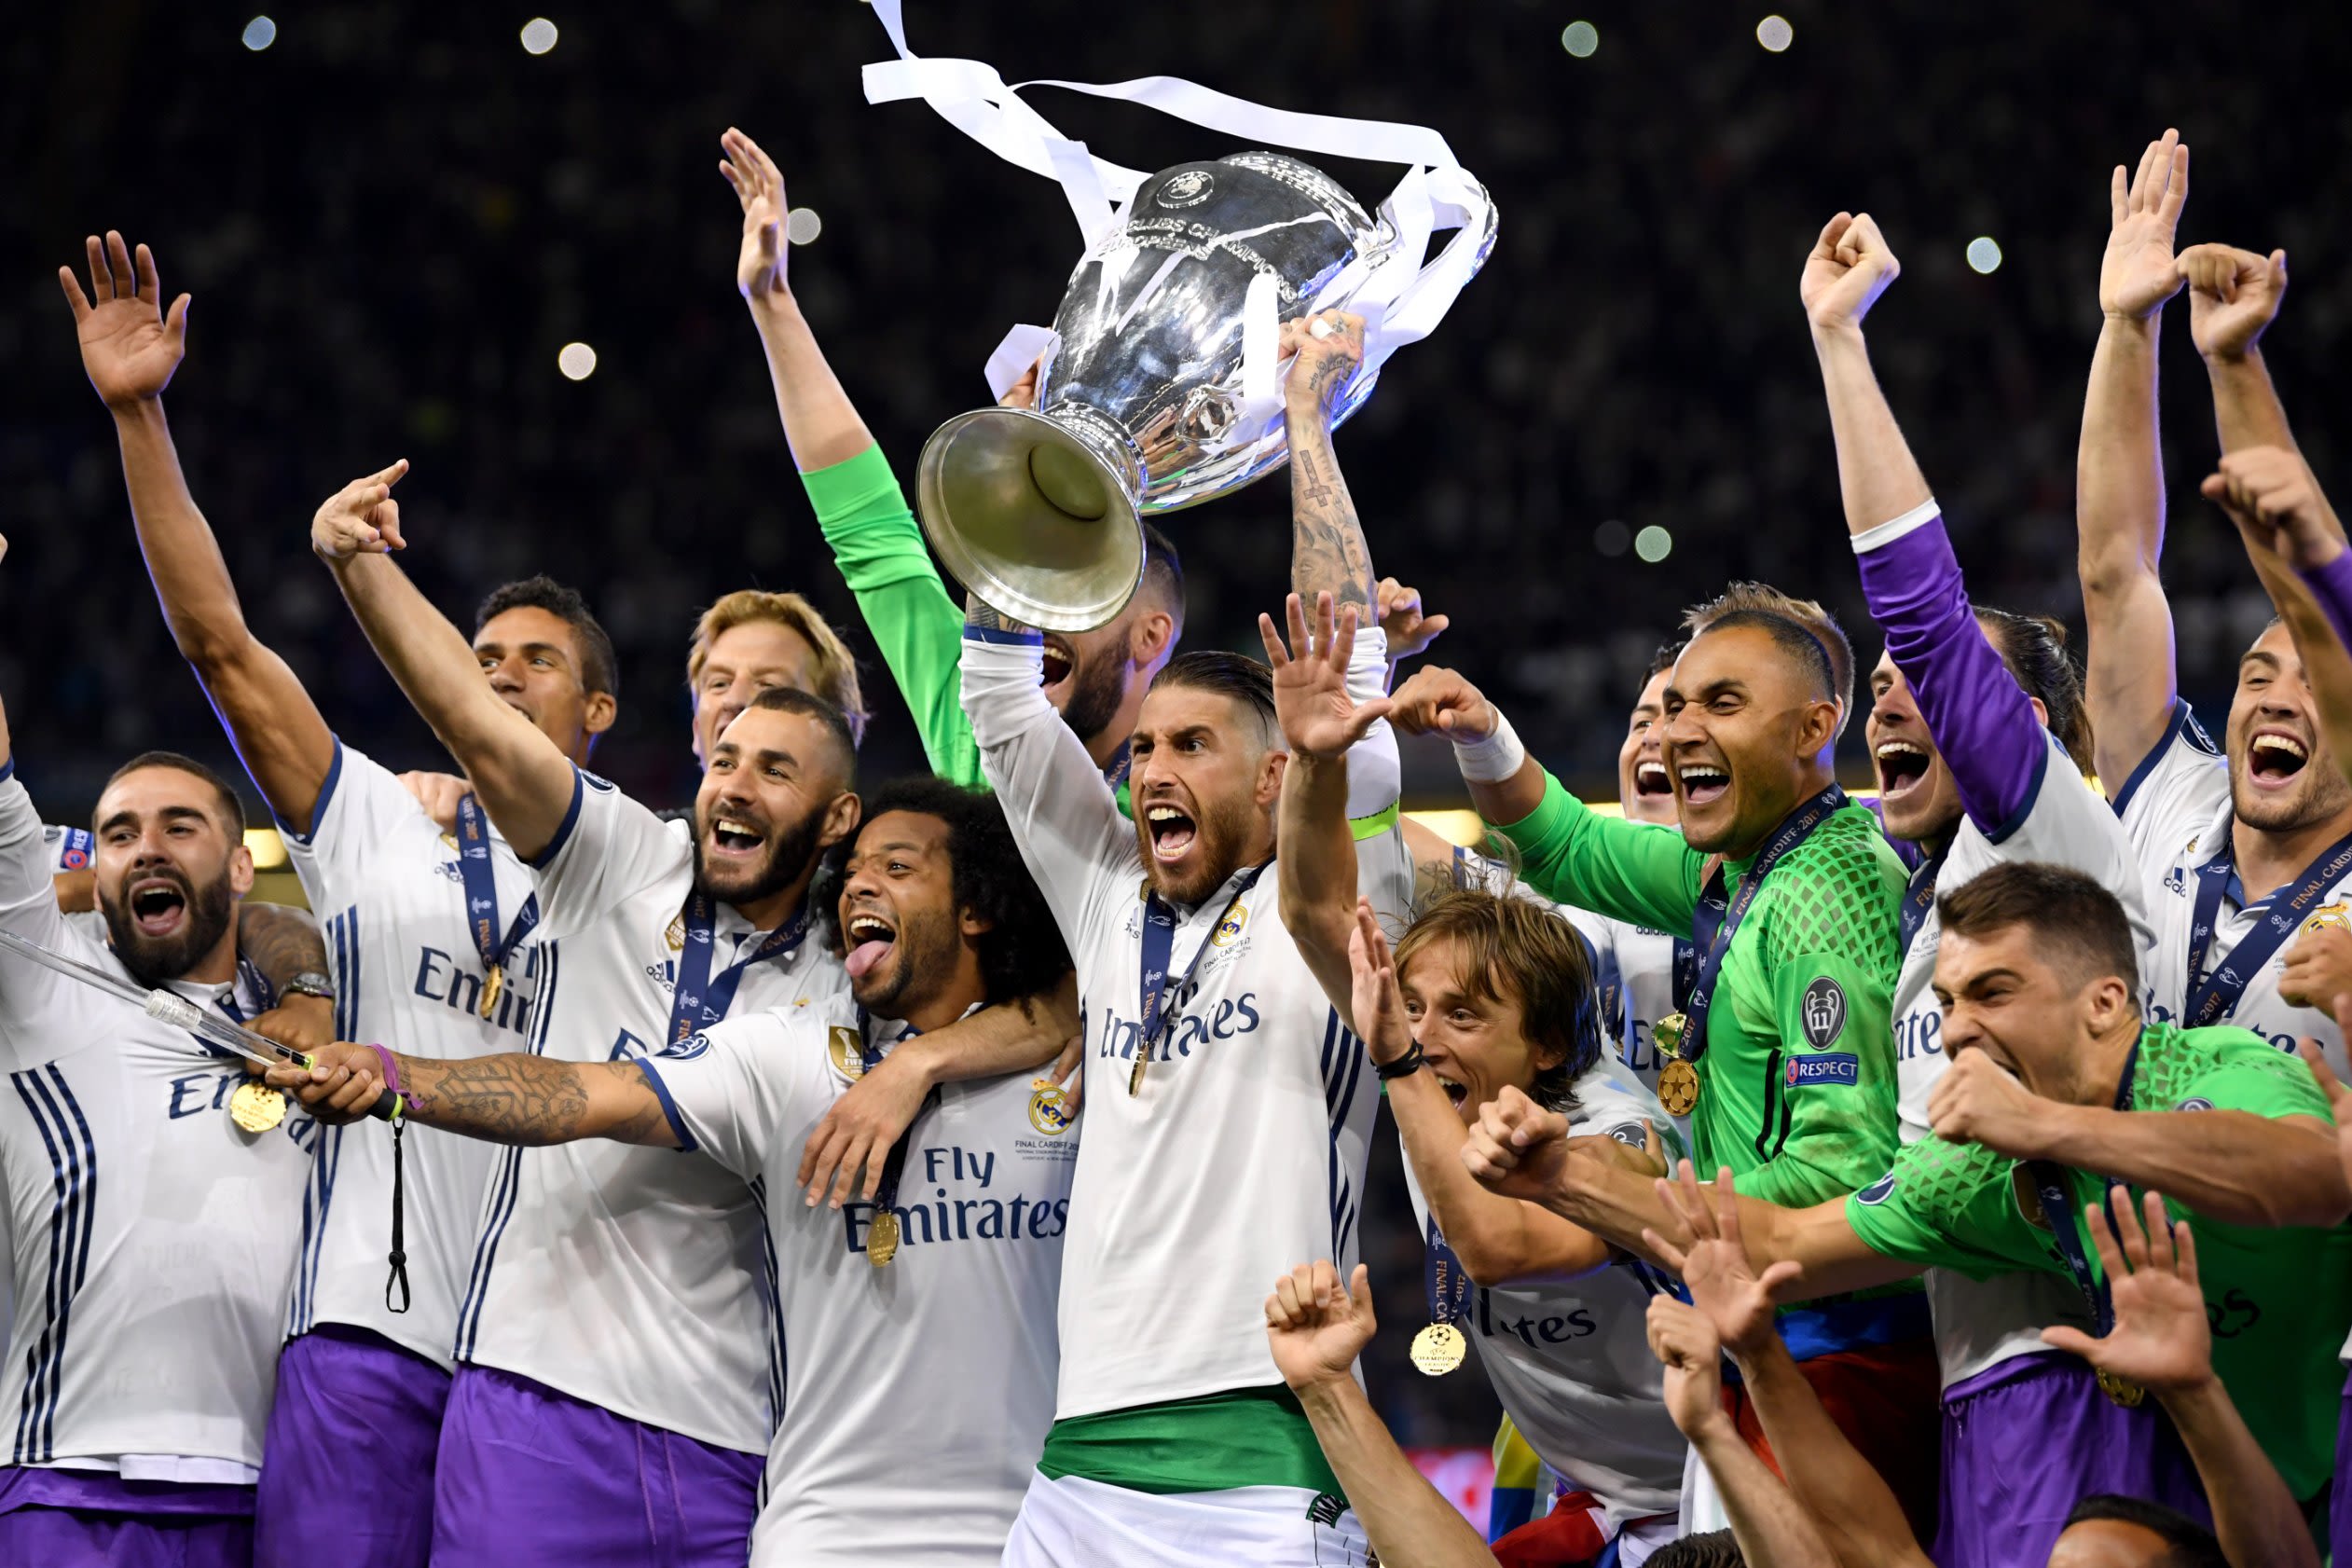 Лига уефа 2017. Реал Мадрид ЛЧ 2017. Реал Мадрид финал Лиги чемпионов 2017. Реал Мадрид ЛЧ 2016. Реал Мадрид 2016 финал Лиги чемпионов.